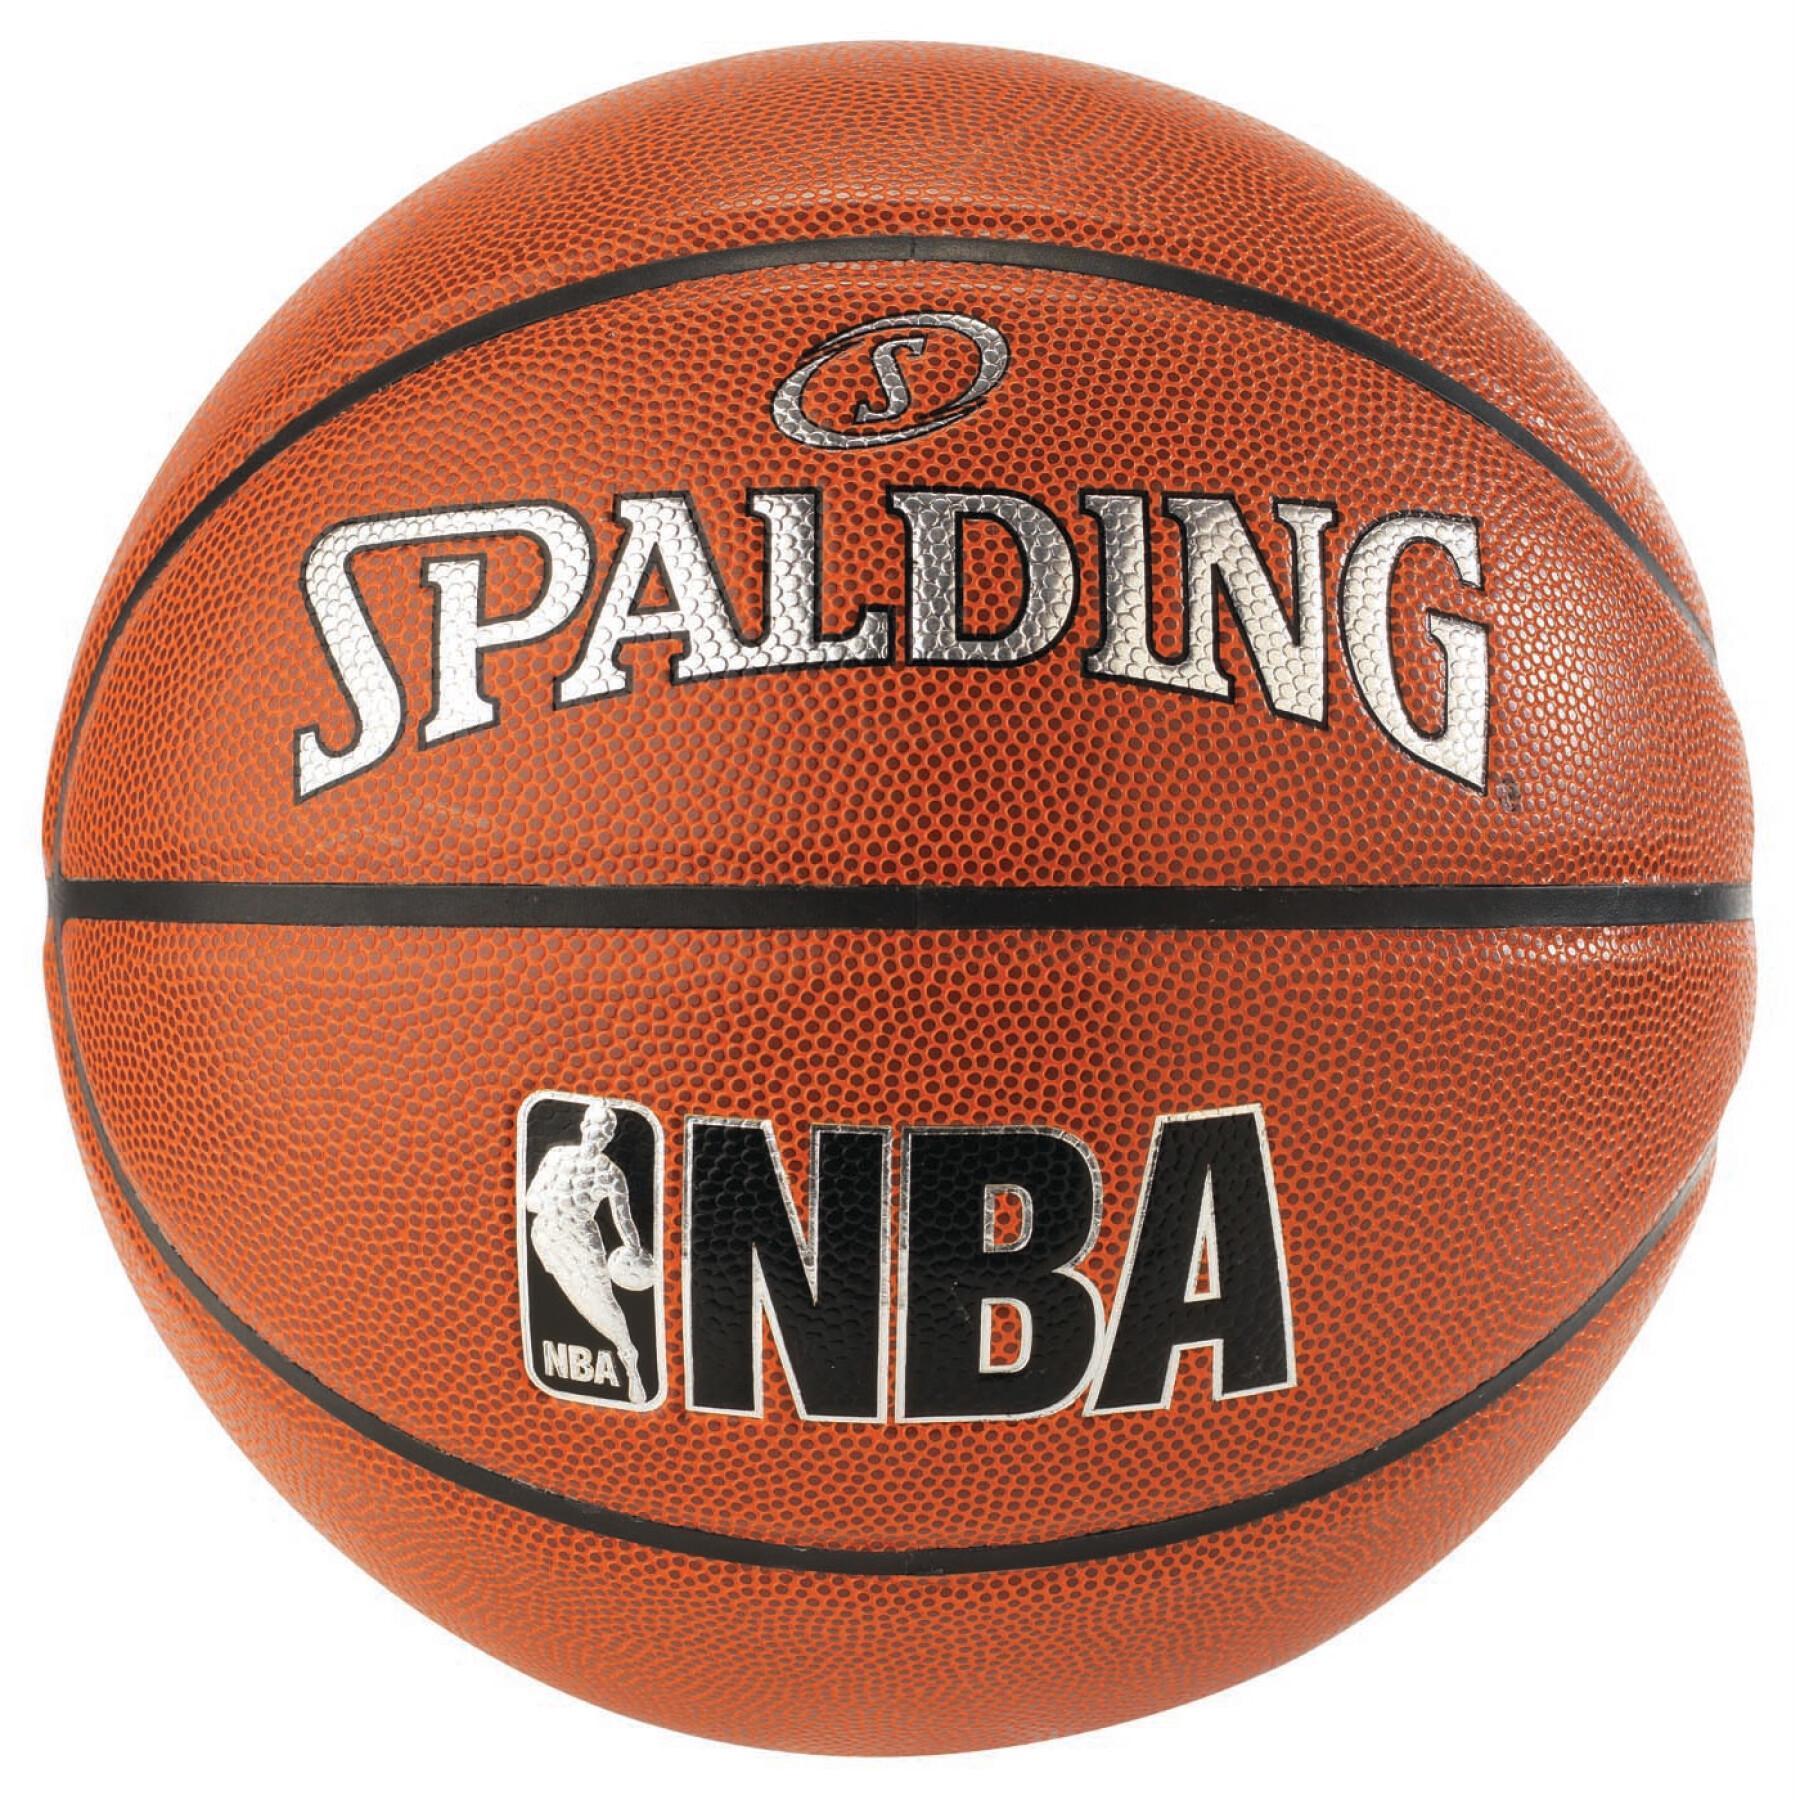 Ballon enfant Spalding NBA In/Out